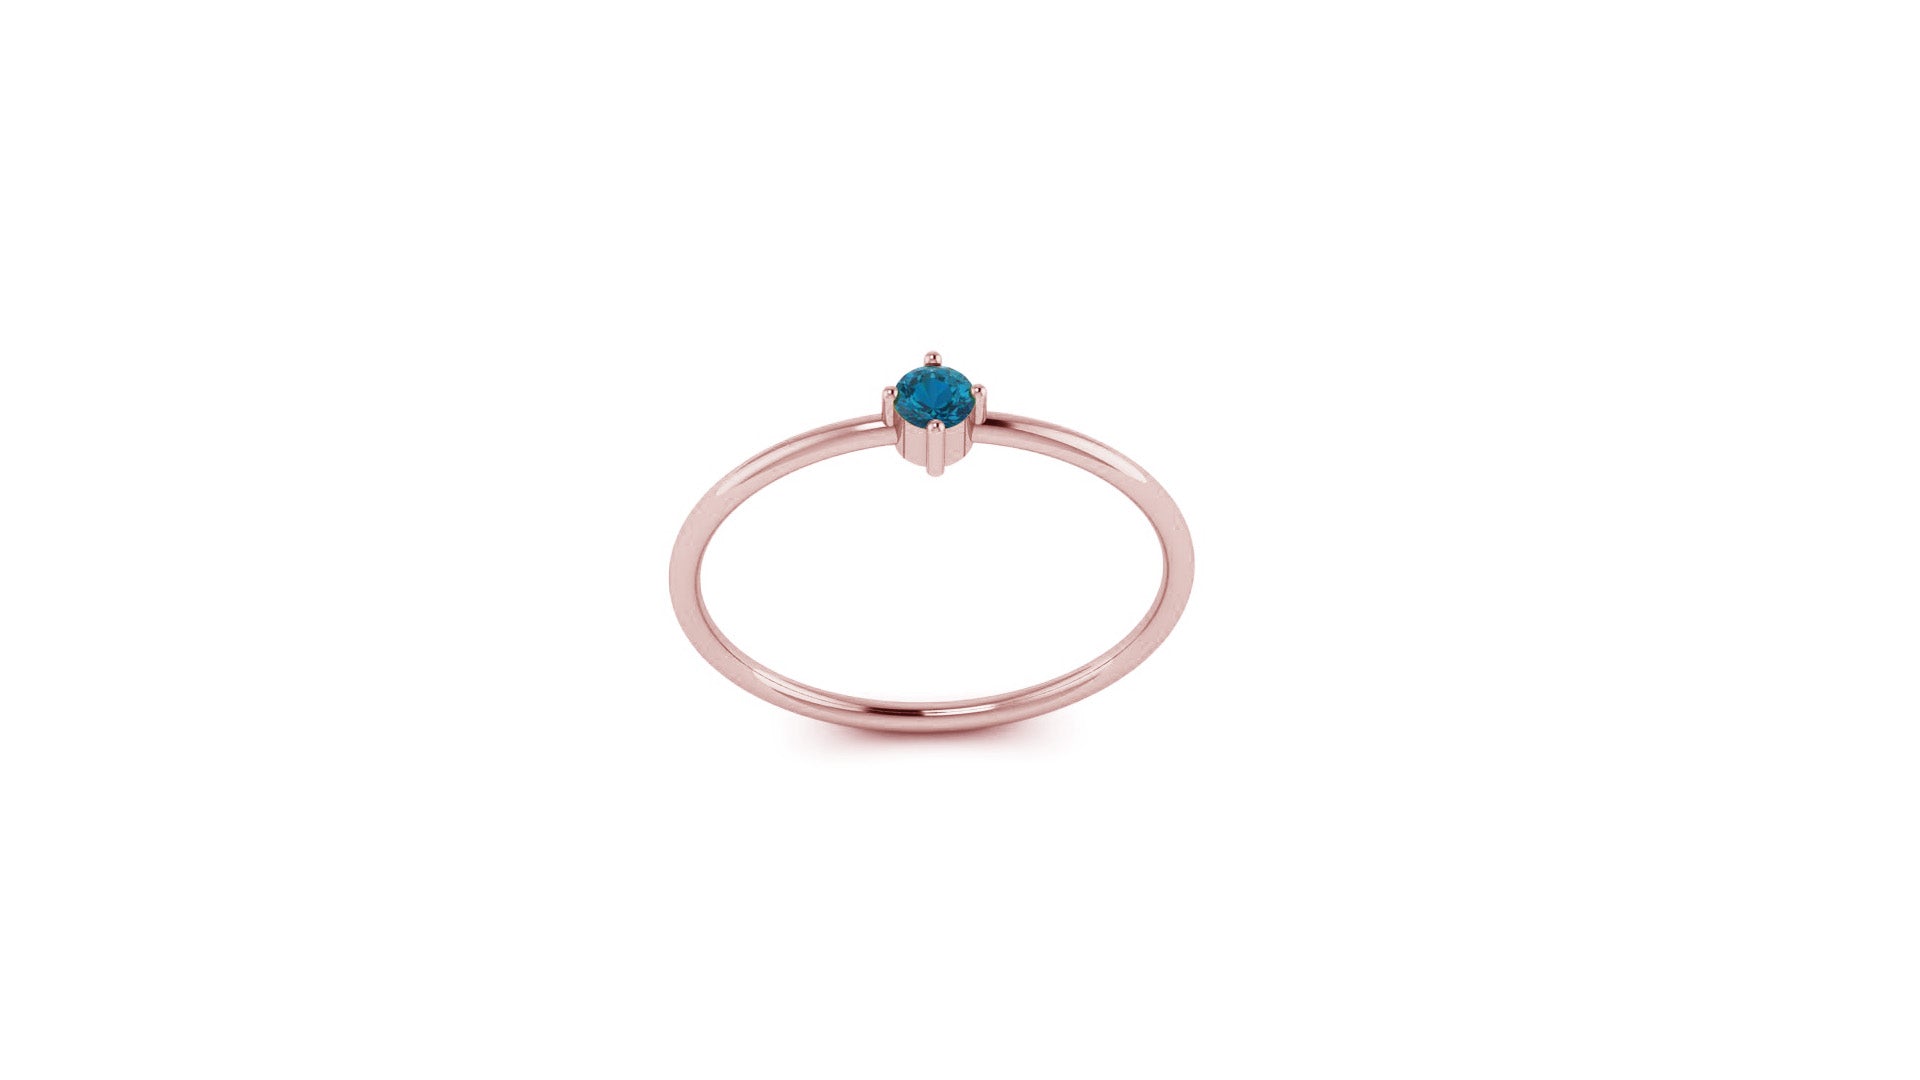 Solo London Blue Topaz Ring in 14kt Rose Gold